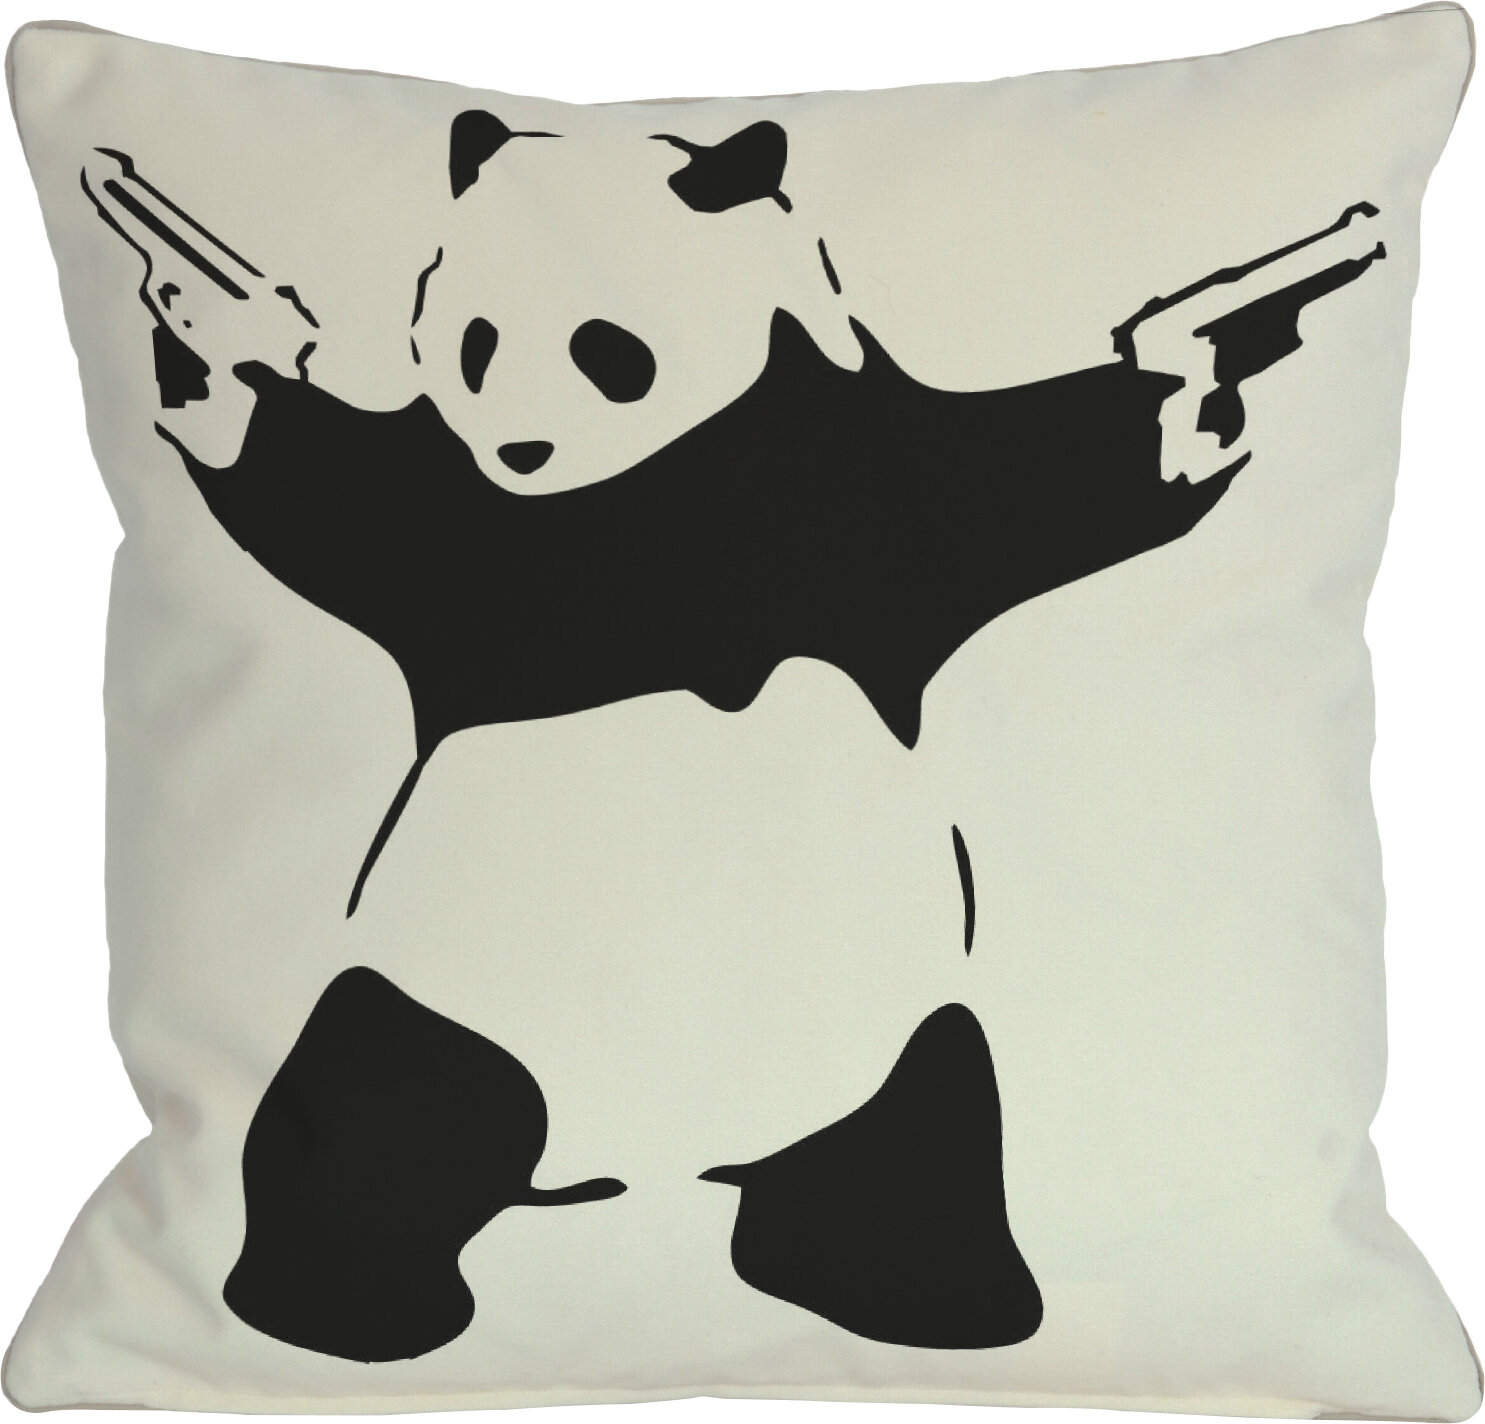 Huebucket Hide and Seek Panda Throw Pillow 16x16 Multicolor 